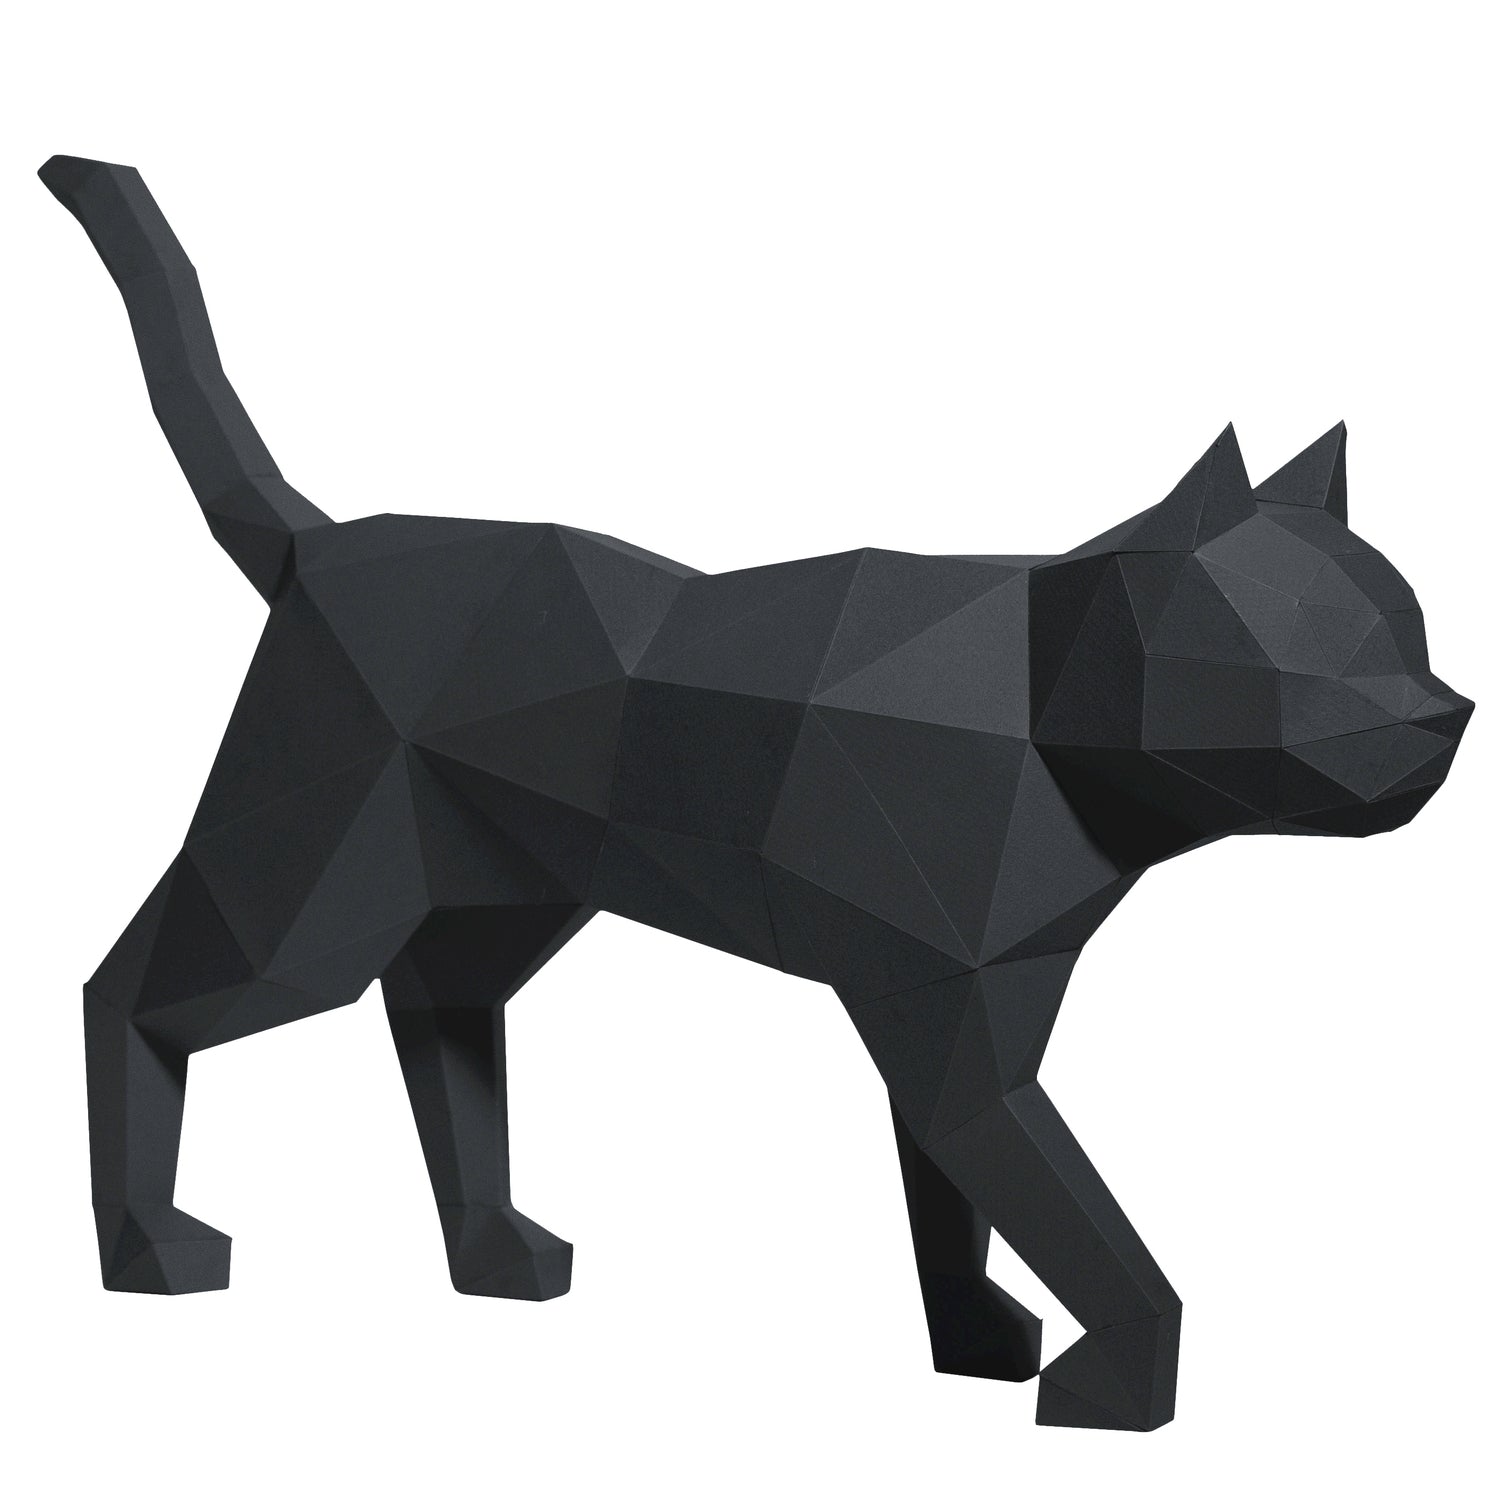 CATTBL 3D Paper Art Black Cat Origami Model